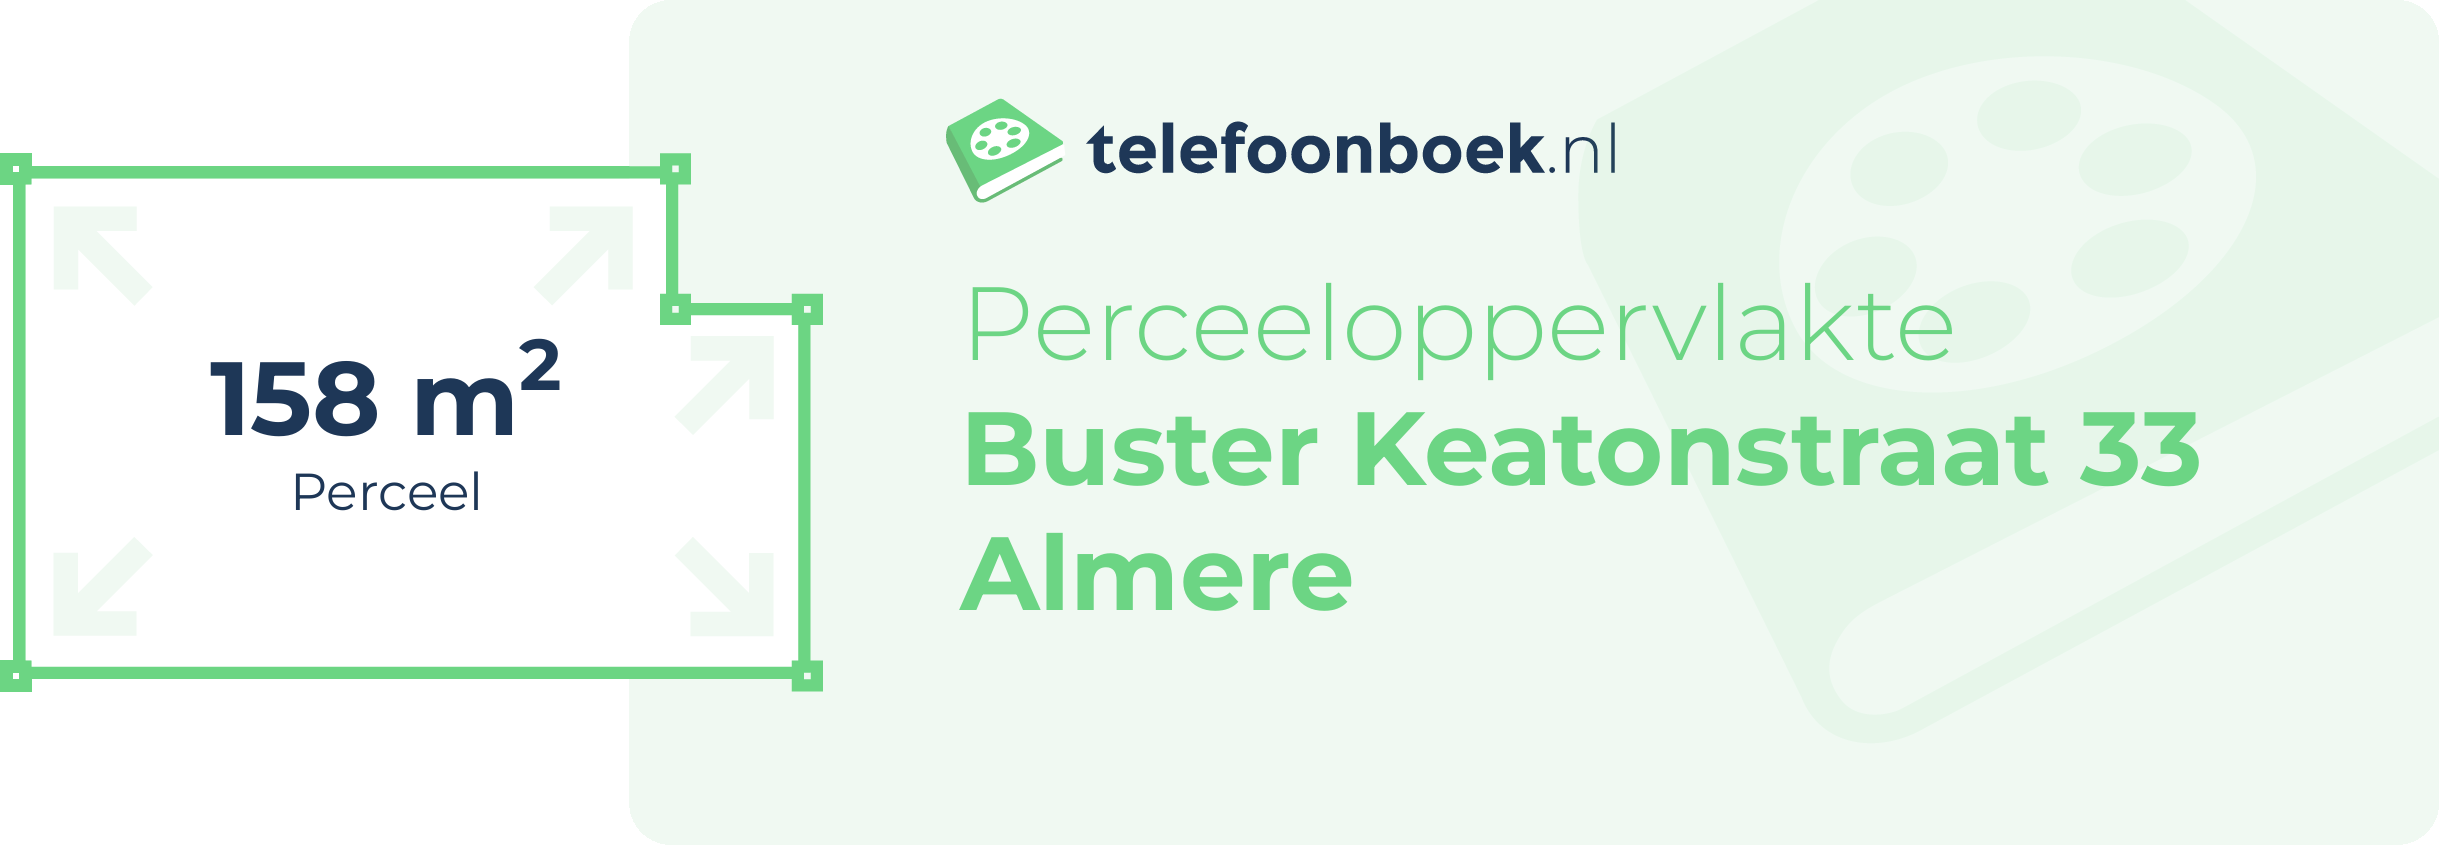 Perceeloppervlakte Buster Keatonstraat 33 Almere